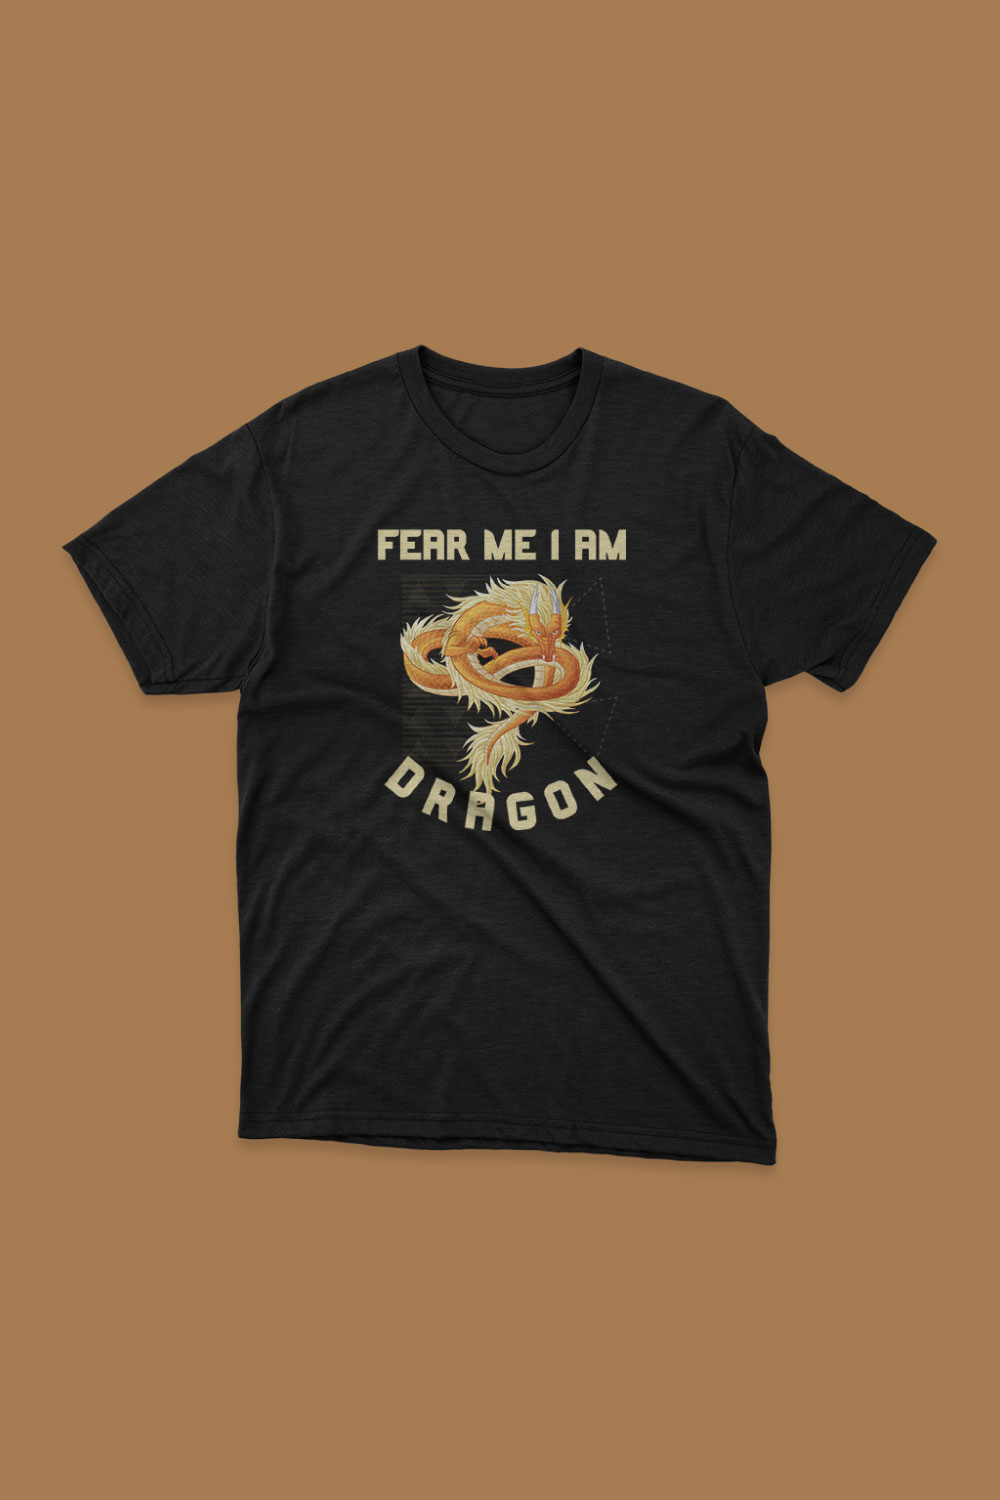 Dragon T Shirt Design pinterest preview image.